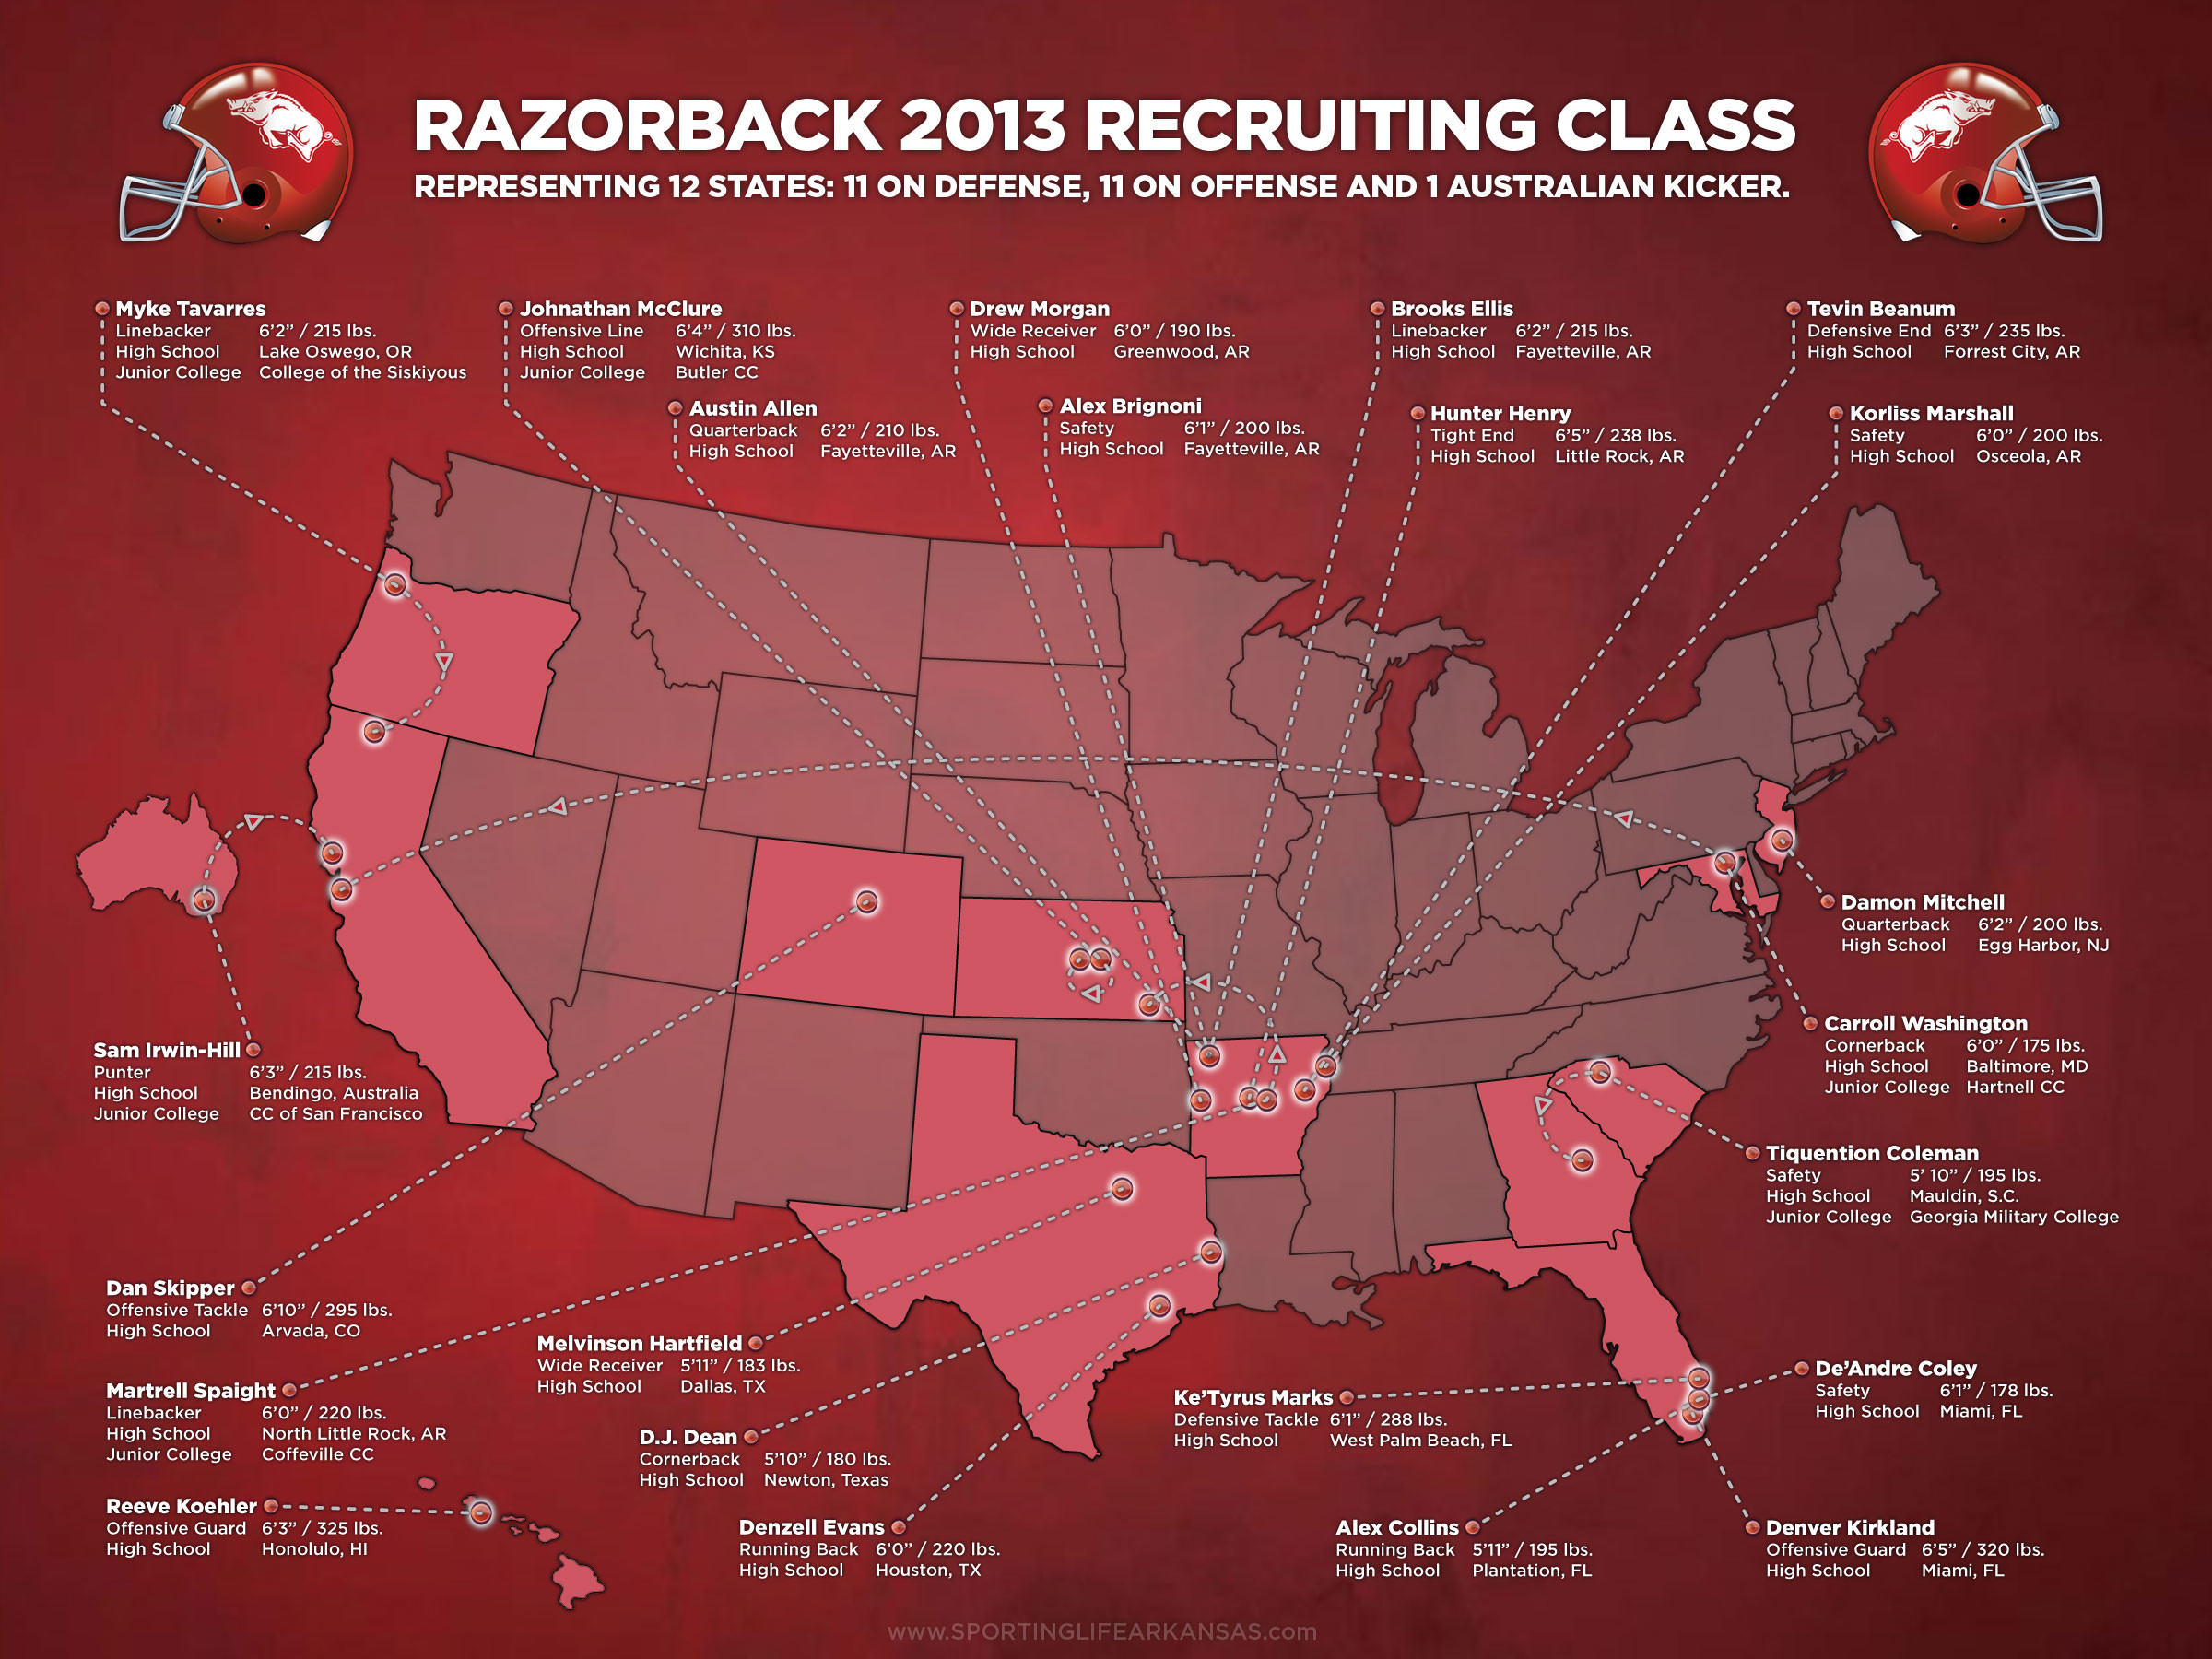 2400x1800 INFOGRAPHIC - 2013 Razorback Recruiting Class | Sporting Life Arkansas